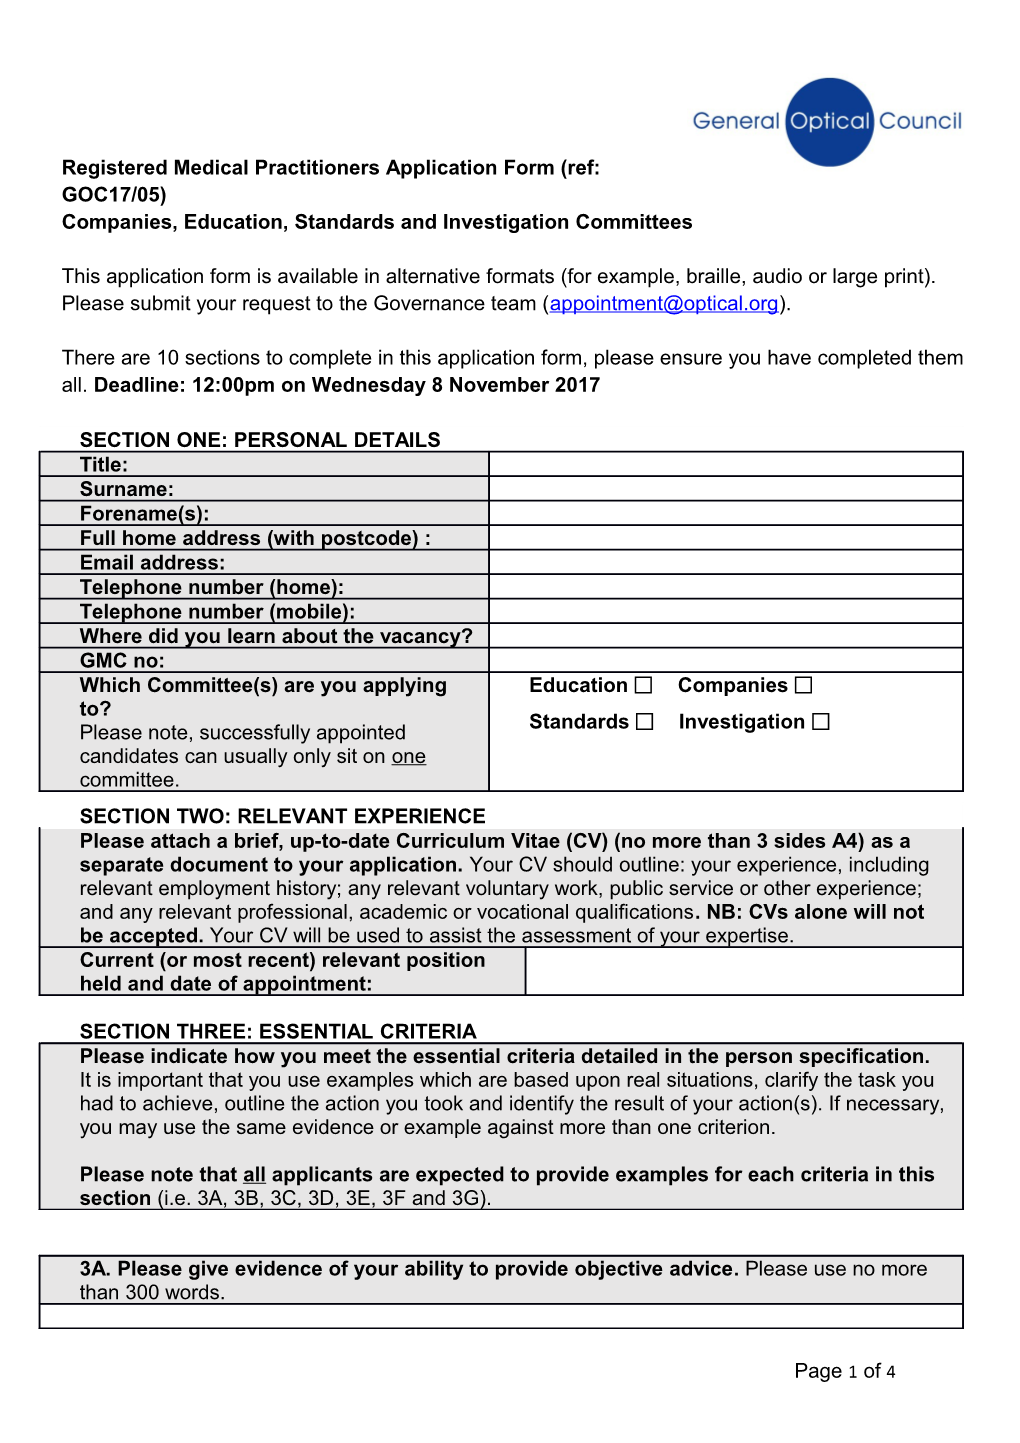 Registered Medical Practitionersapplication Form (Ref: GOC17/05)